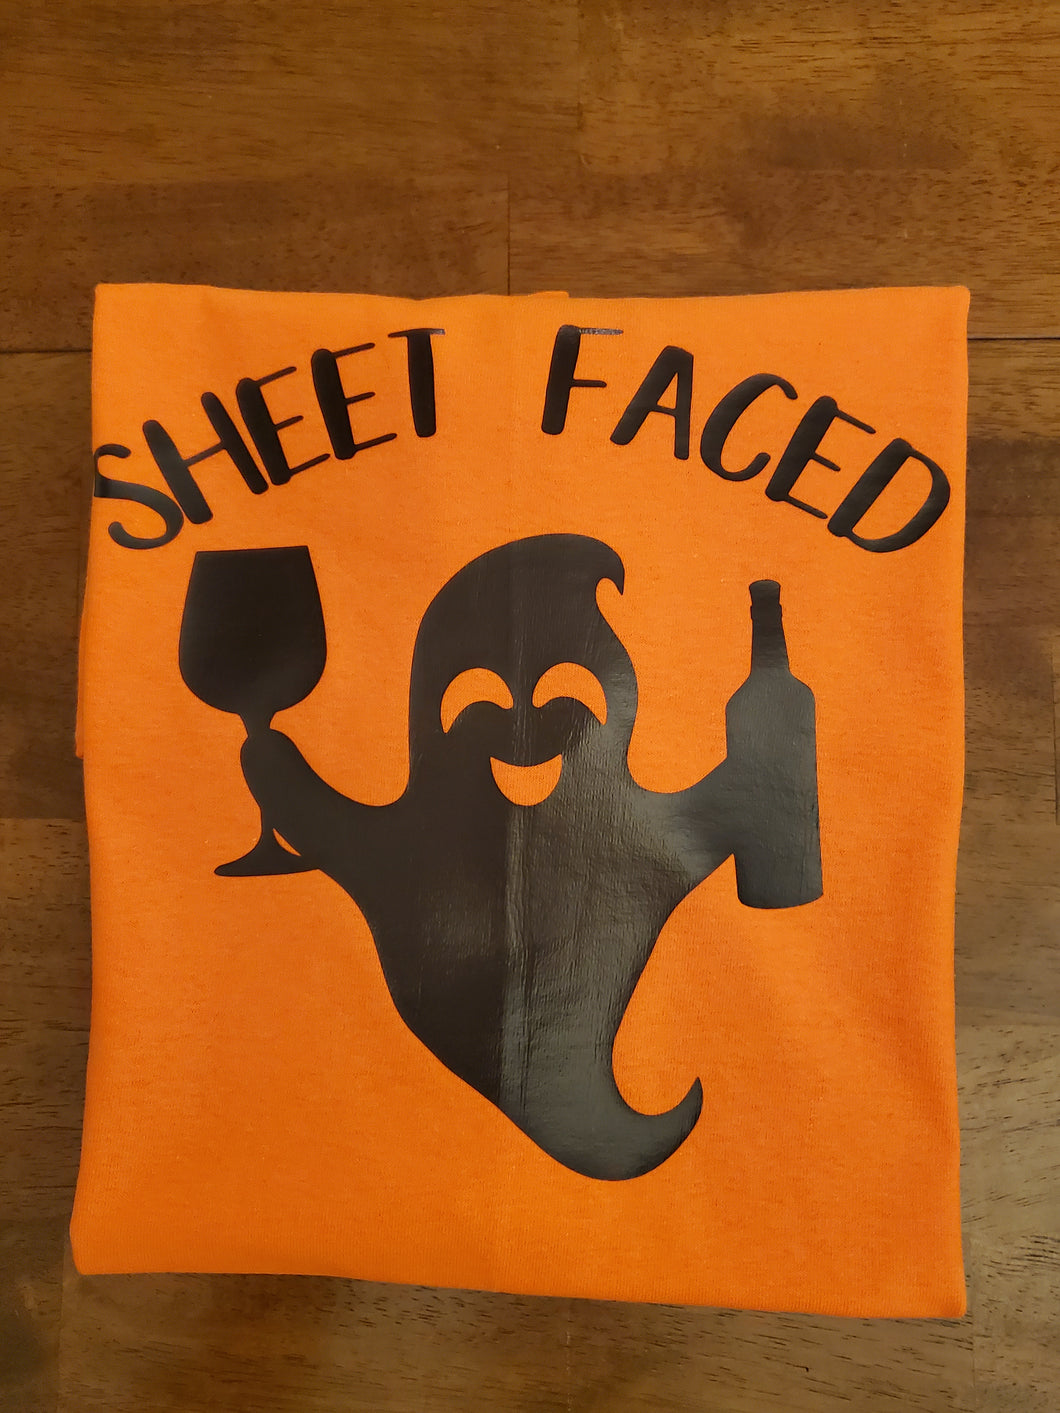 Sheet Faced